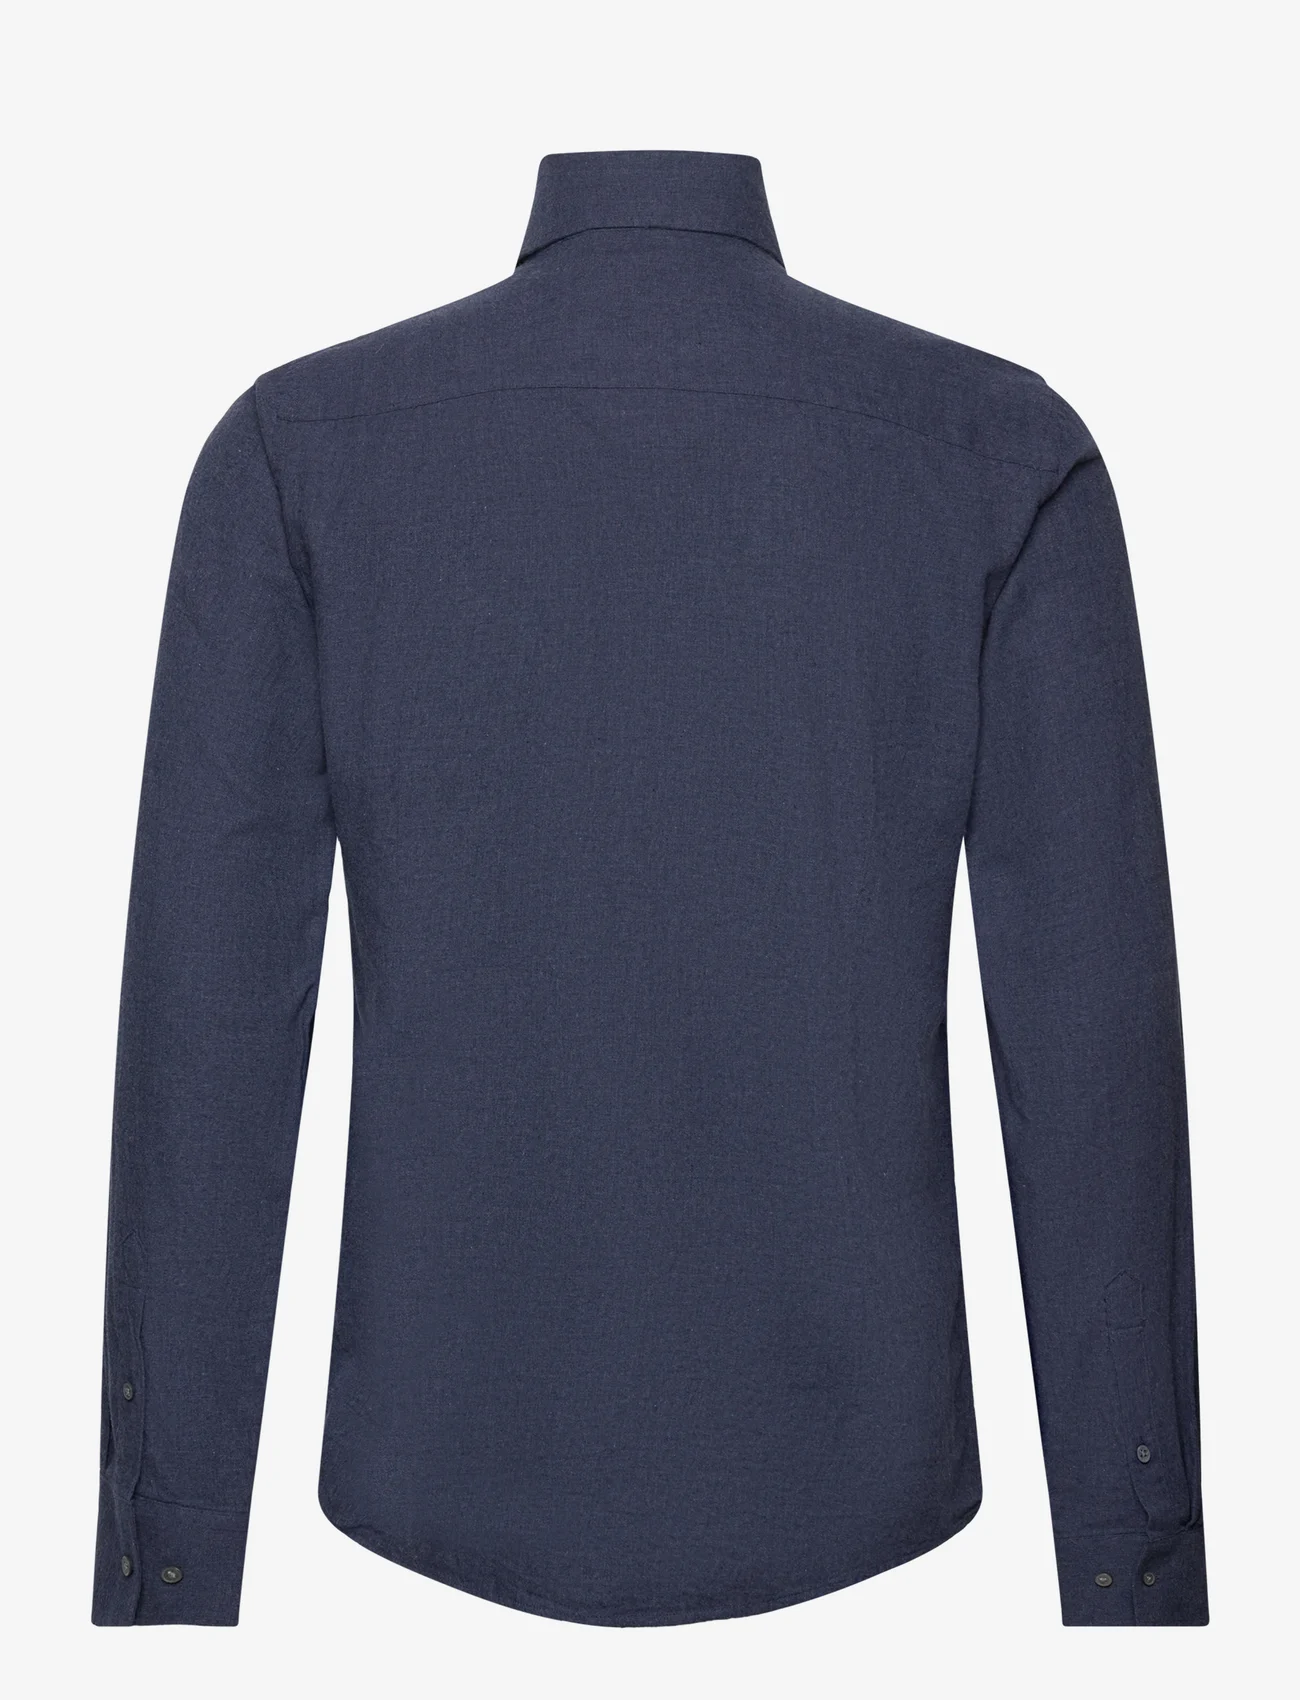 Bruun & Stengade - BS Floyd Casual Slim Fit Shirt - basic shirts - blue - 1